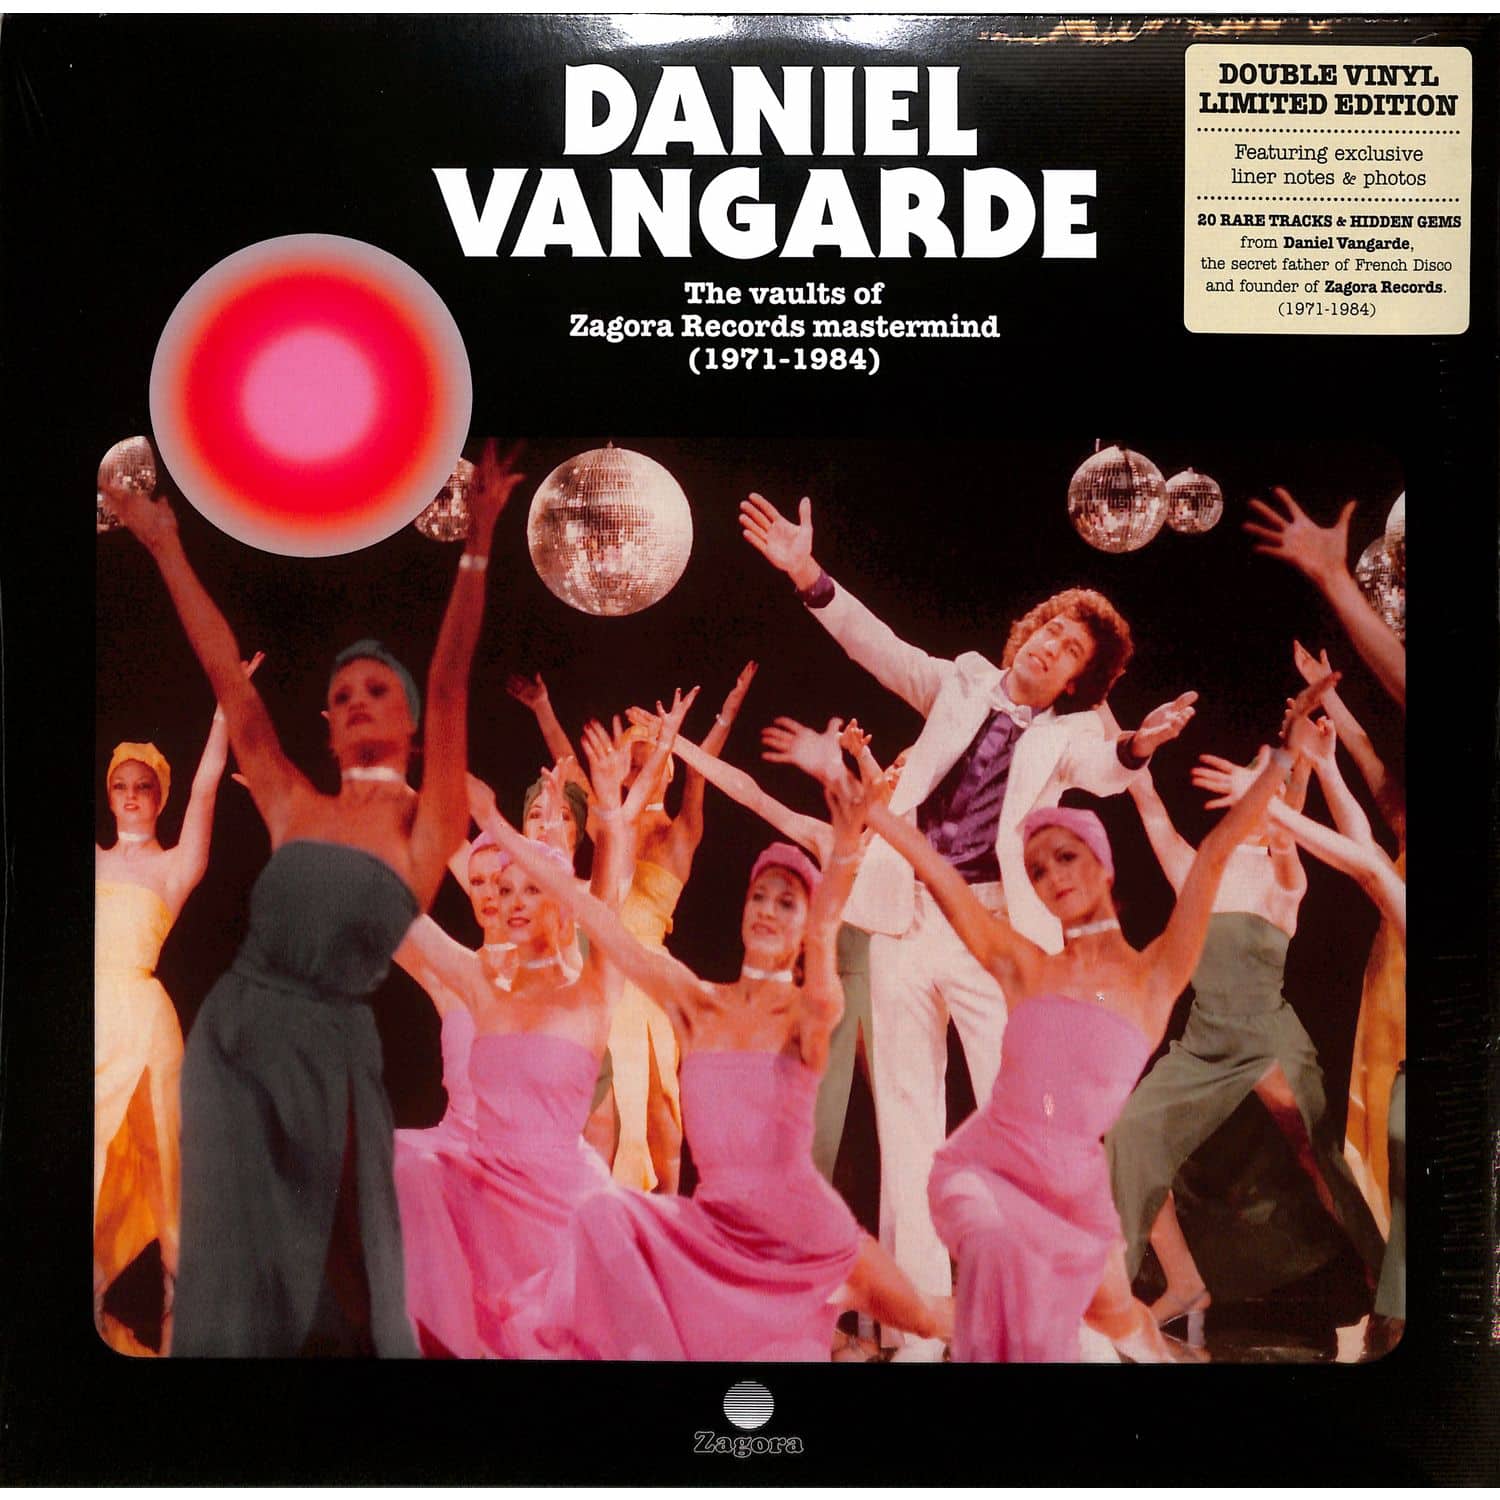 Daniel Vangarde - Daniel Vangarde The Vaults - OF ZAGORA MASTERMIND 